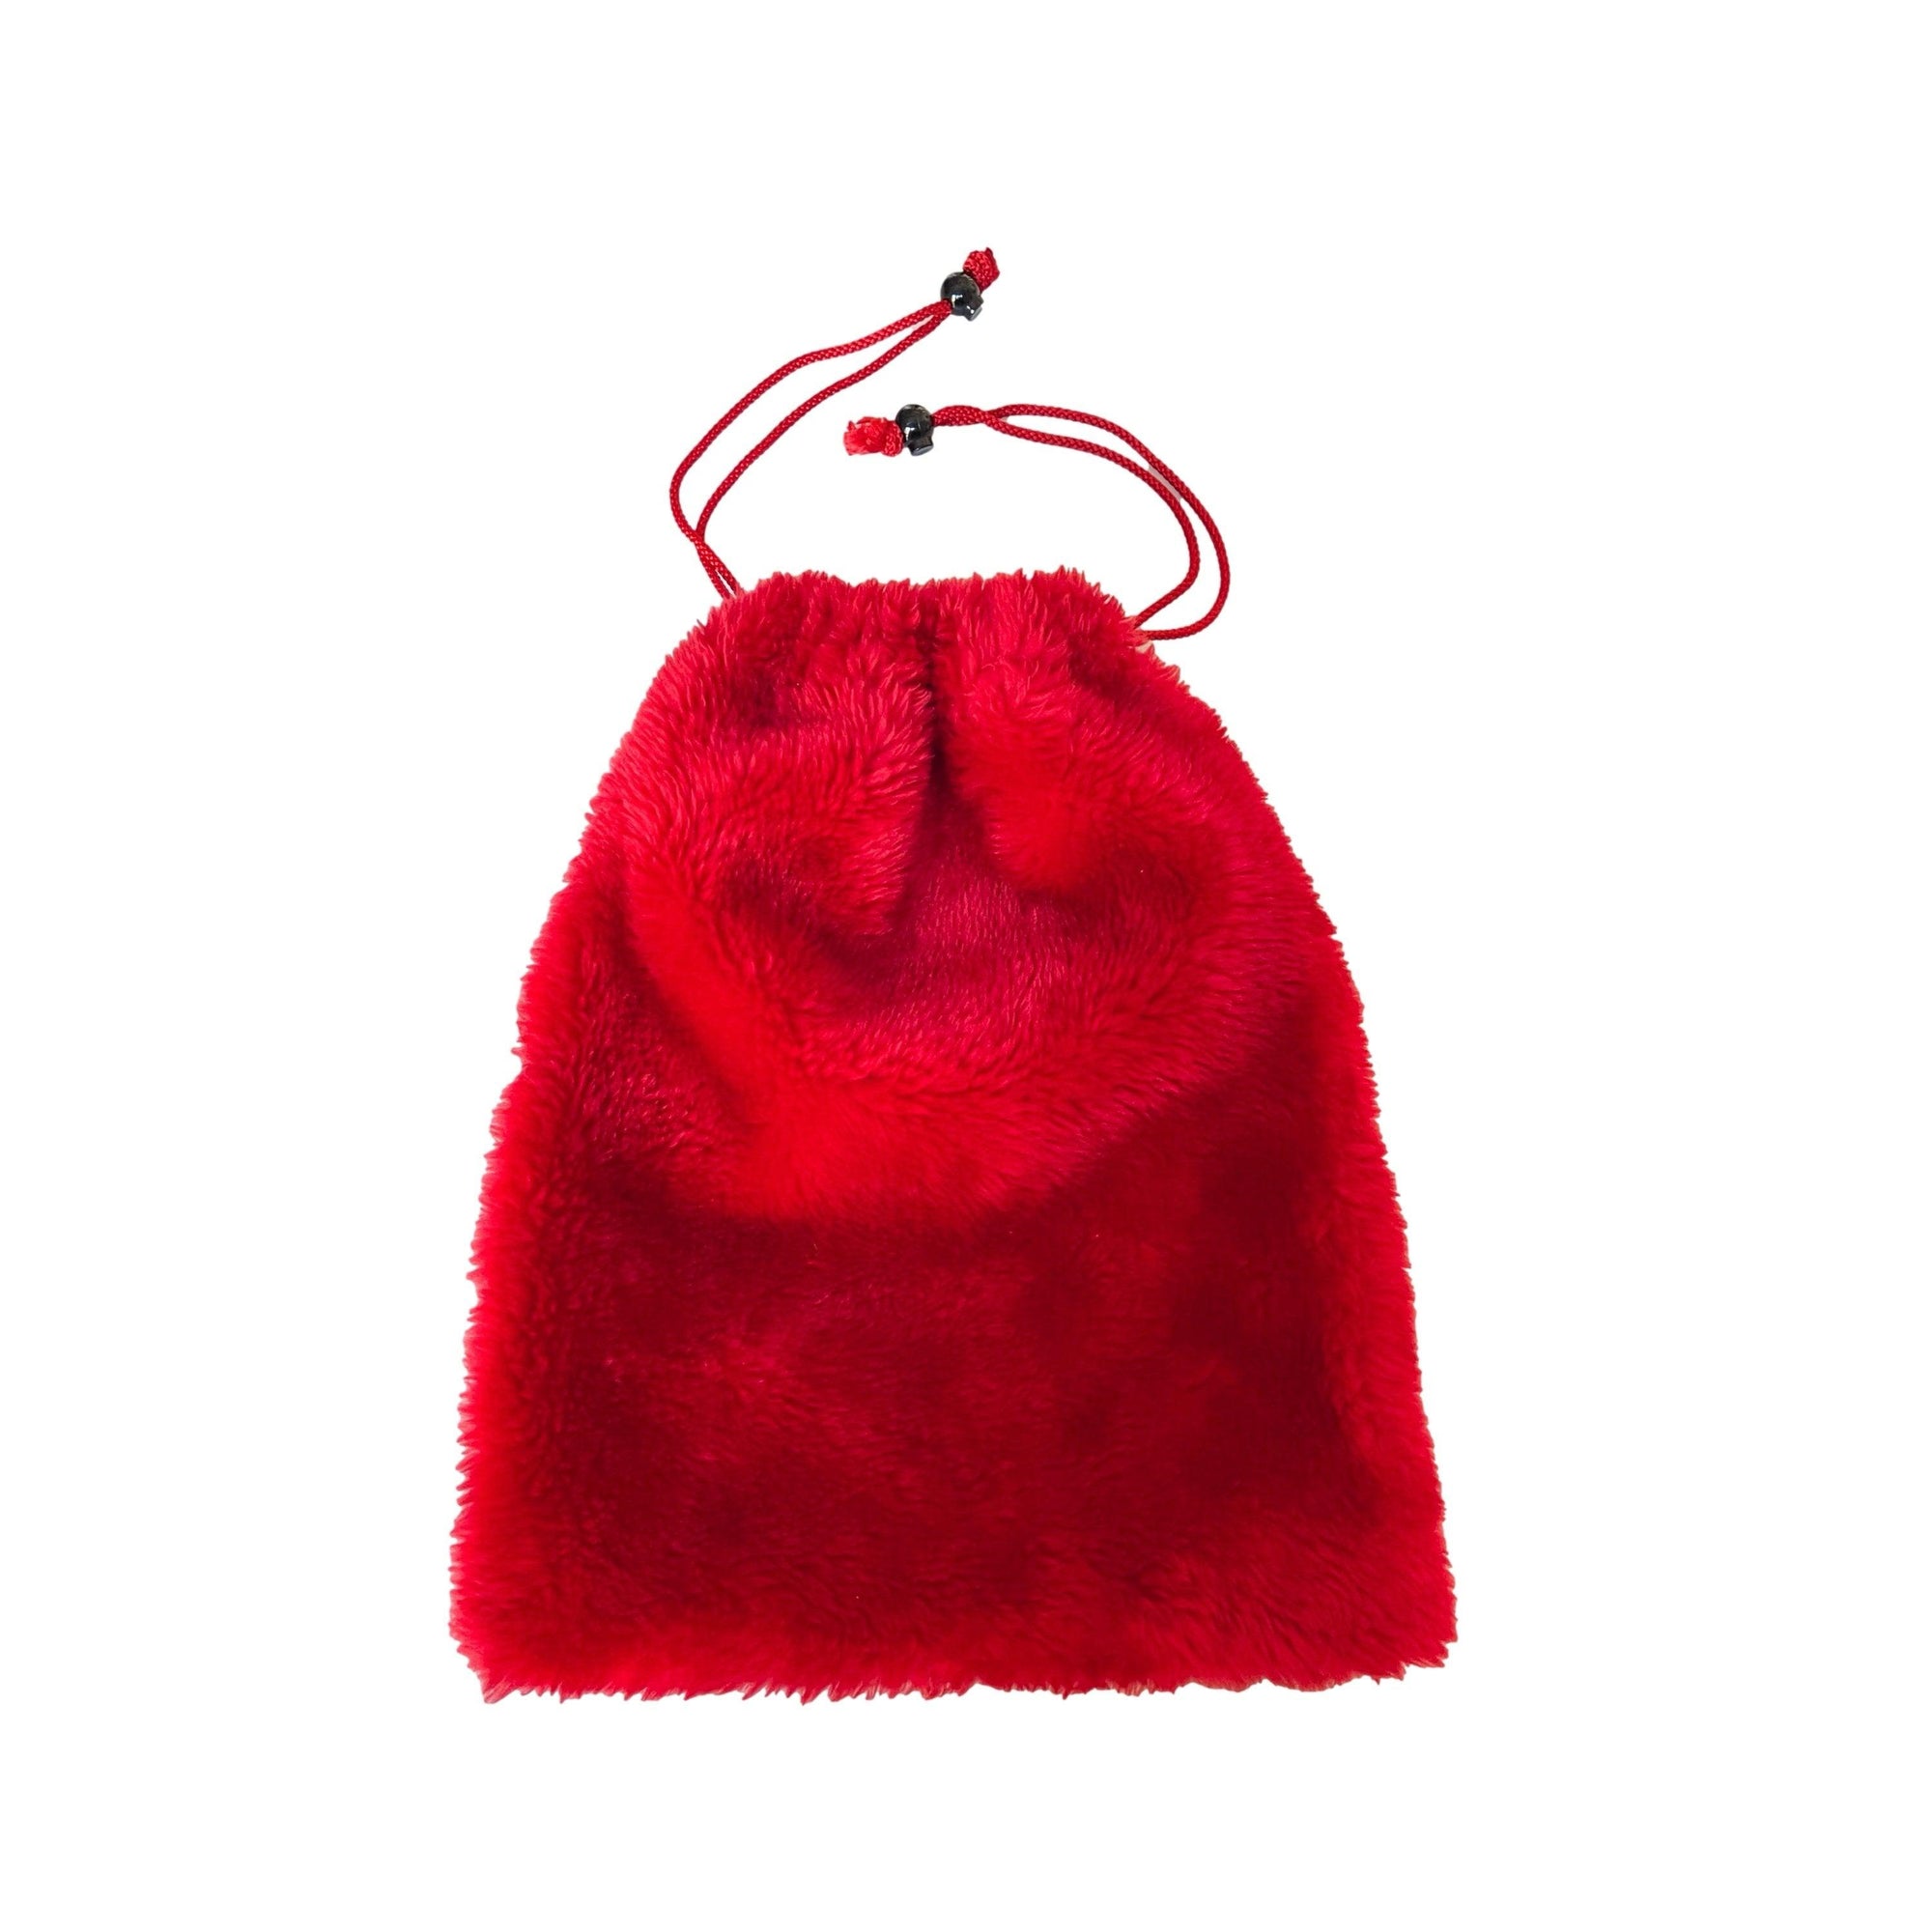 Dior Red Faux Fur Drawstring Bag - Handbags